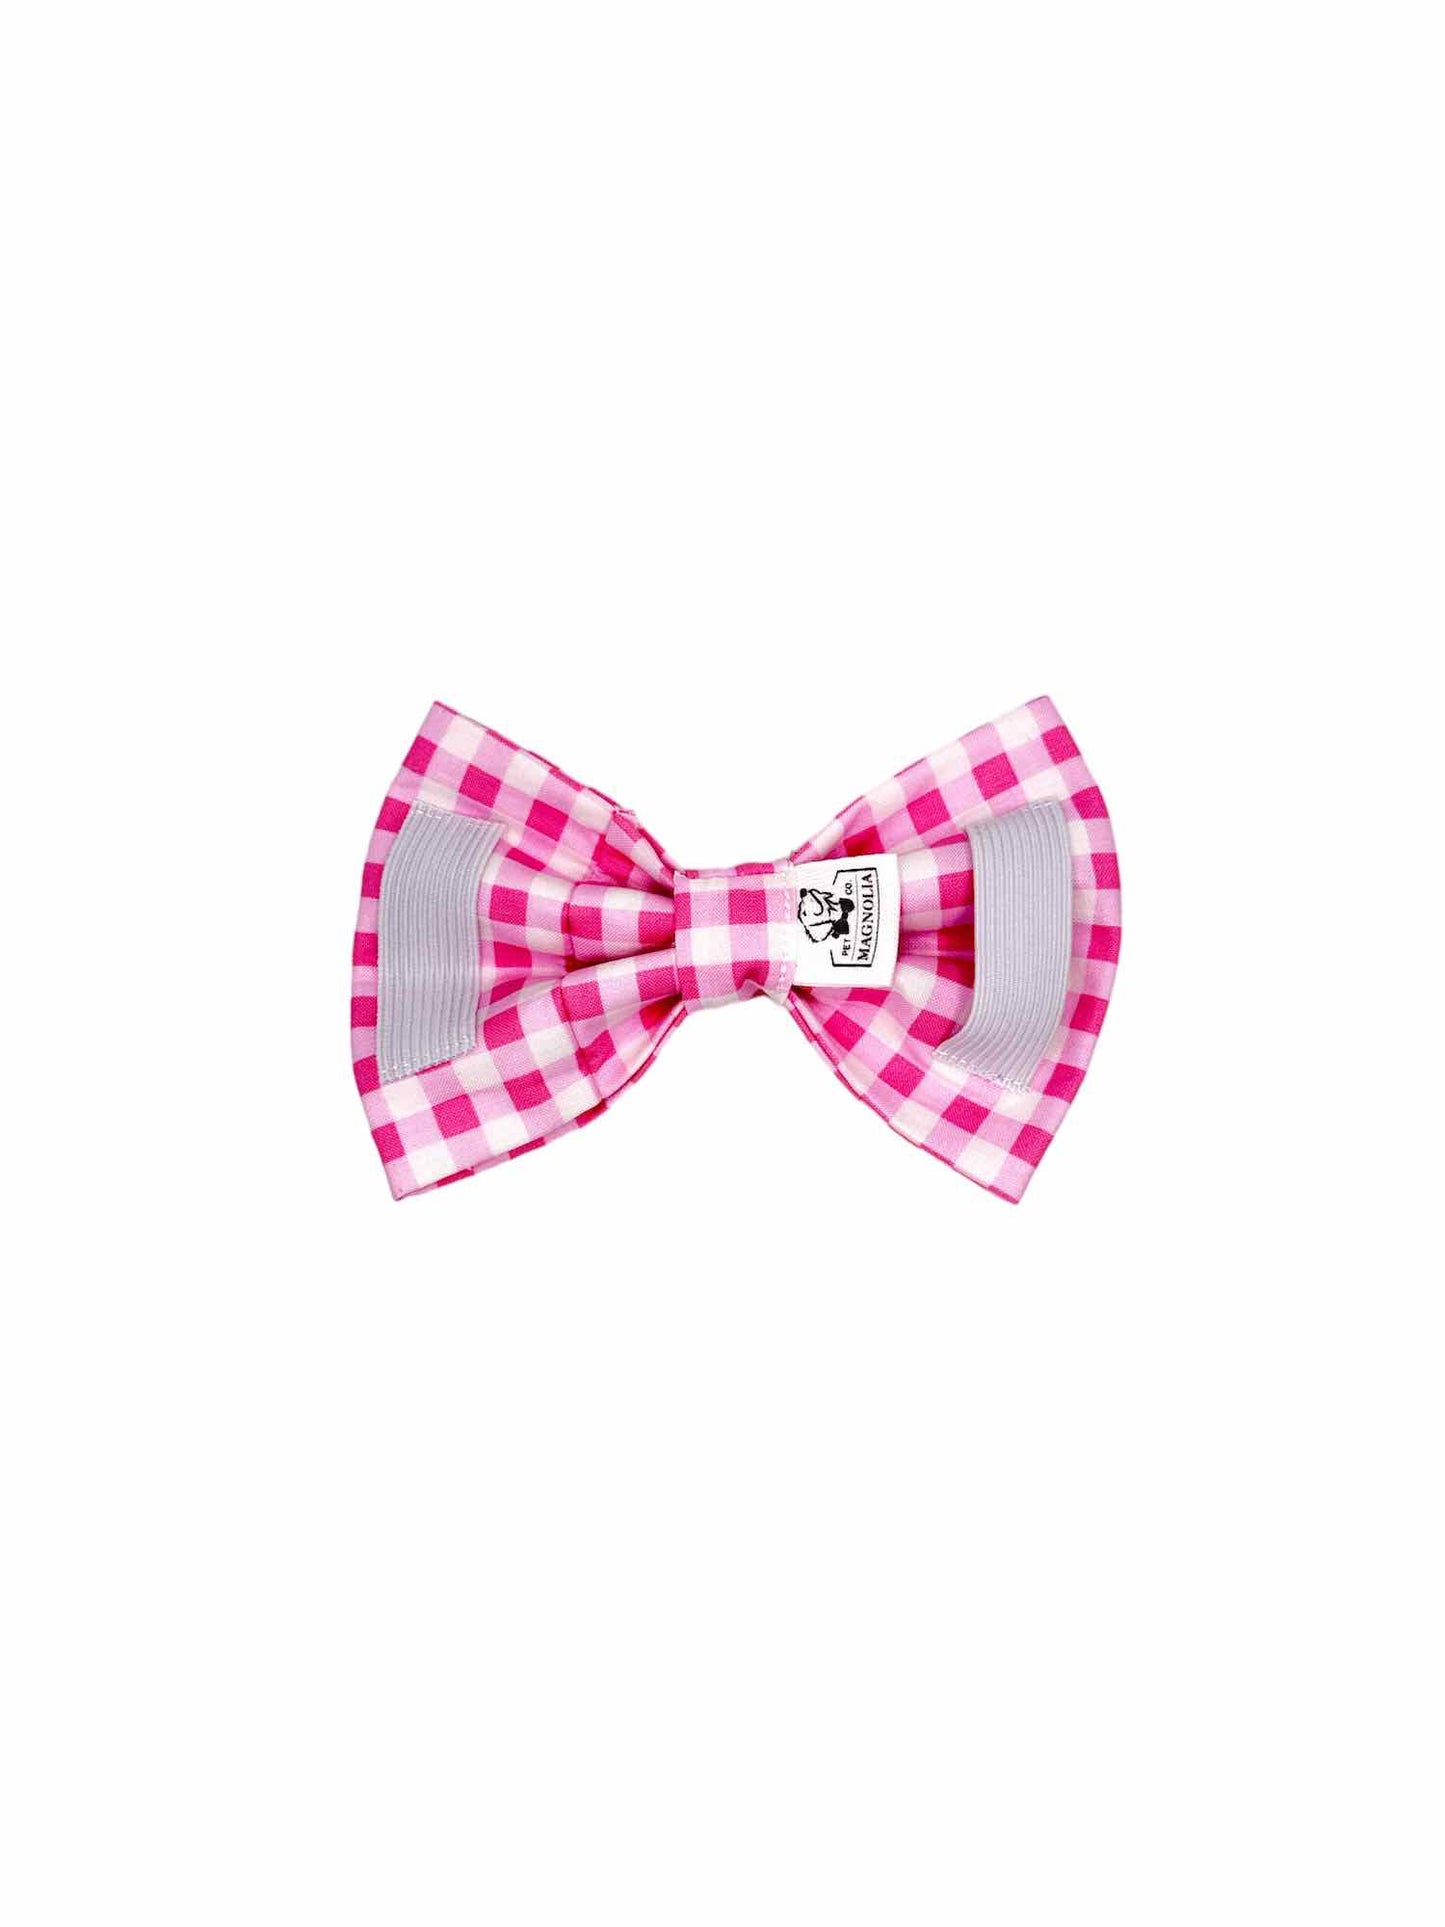 Pink Picnic Plaid Bow Tie